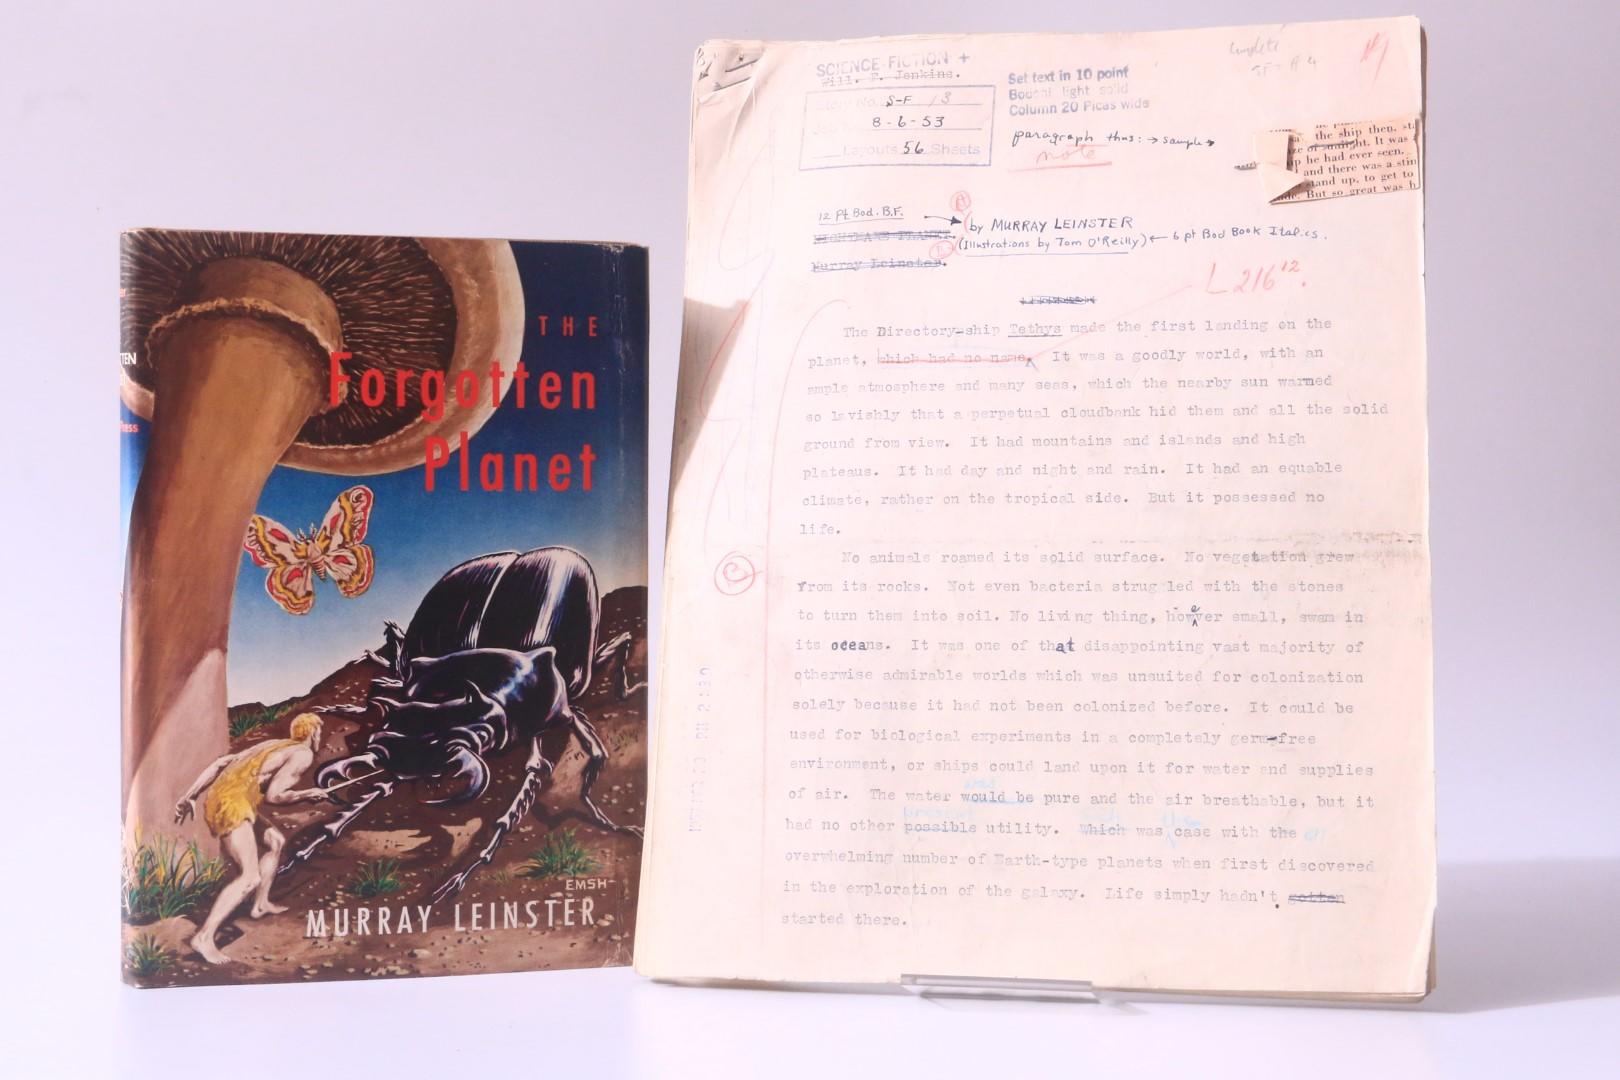 Murray Leinster - Typescript for Nightmare Planet - Gernsback Publications, 1953, Manuscript.